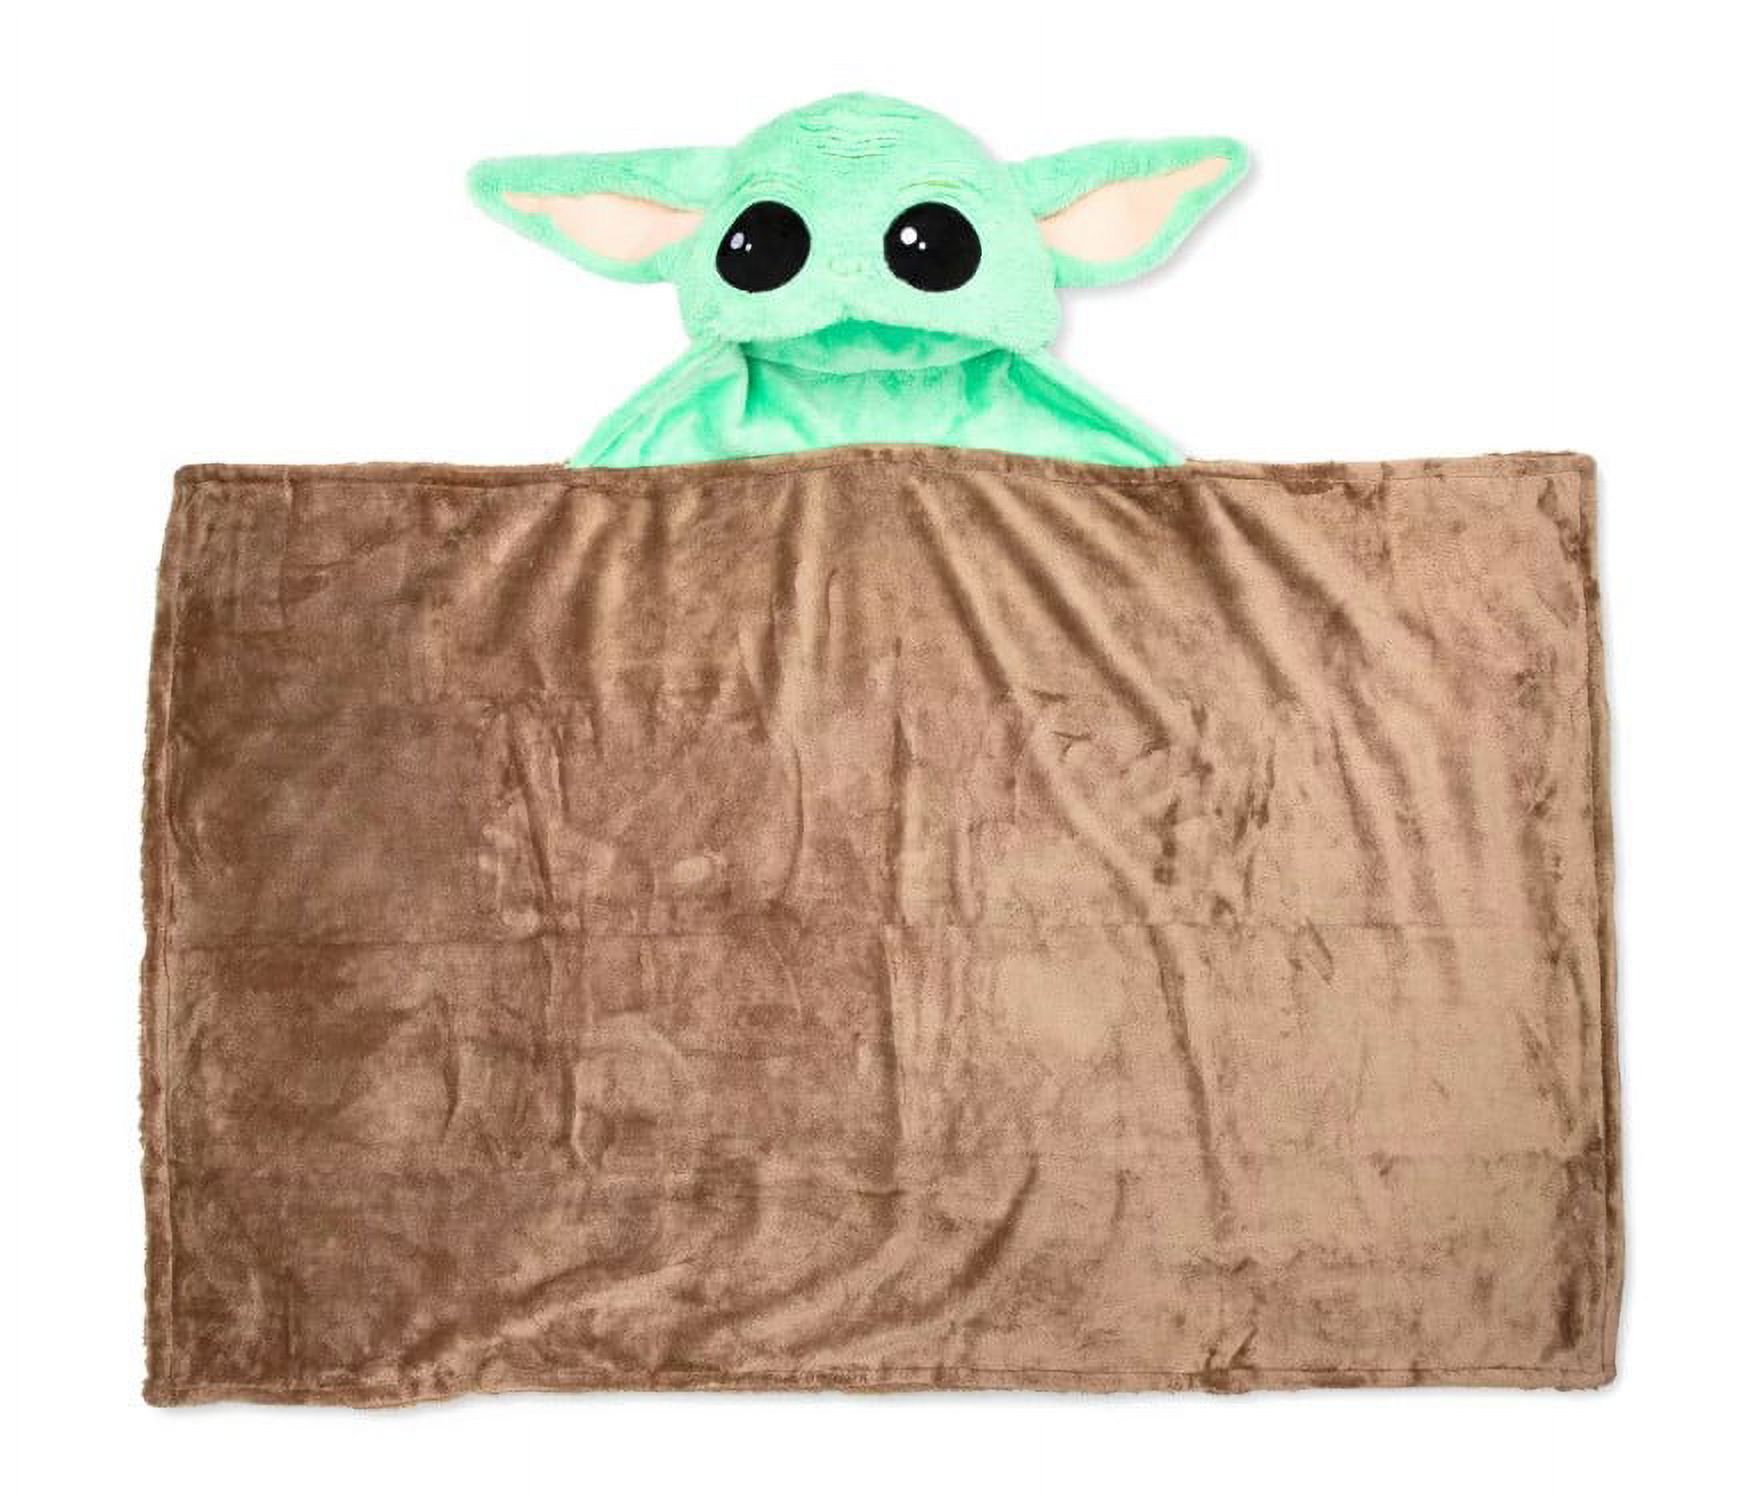 Star Wars " The Mandalorian" Hooded Blanket - image 3 of 4